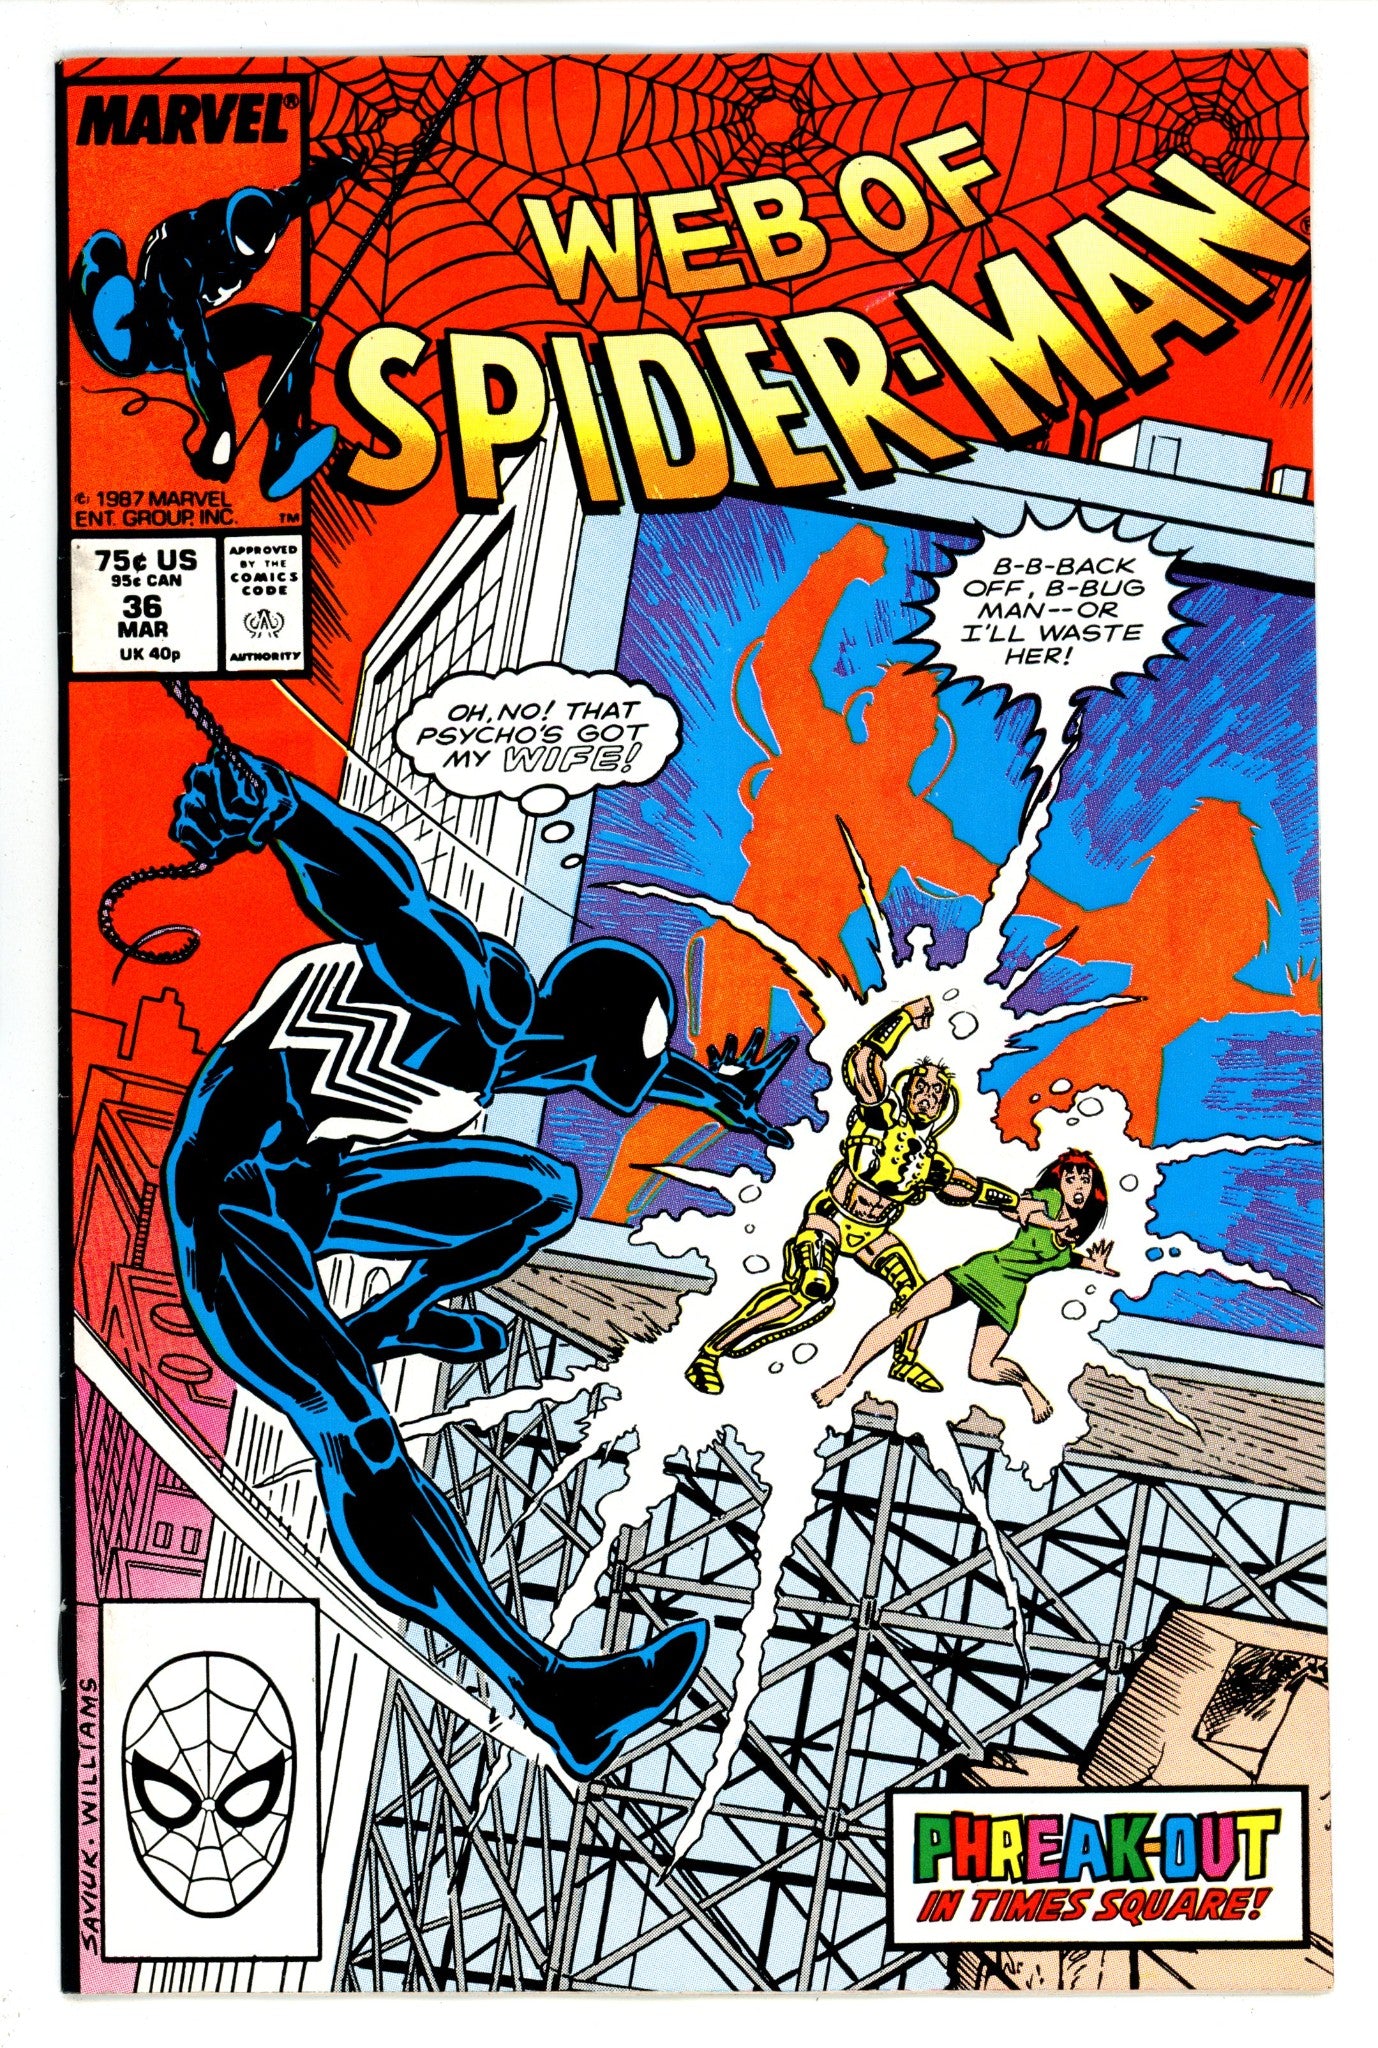 Web of Spider-Man Vol 1 36 VF (8.0) (1988) 